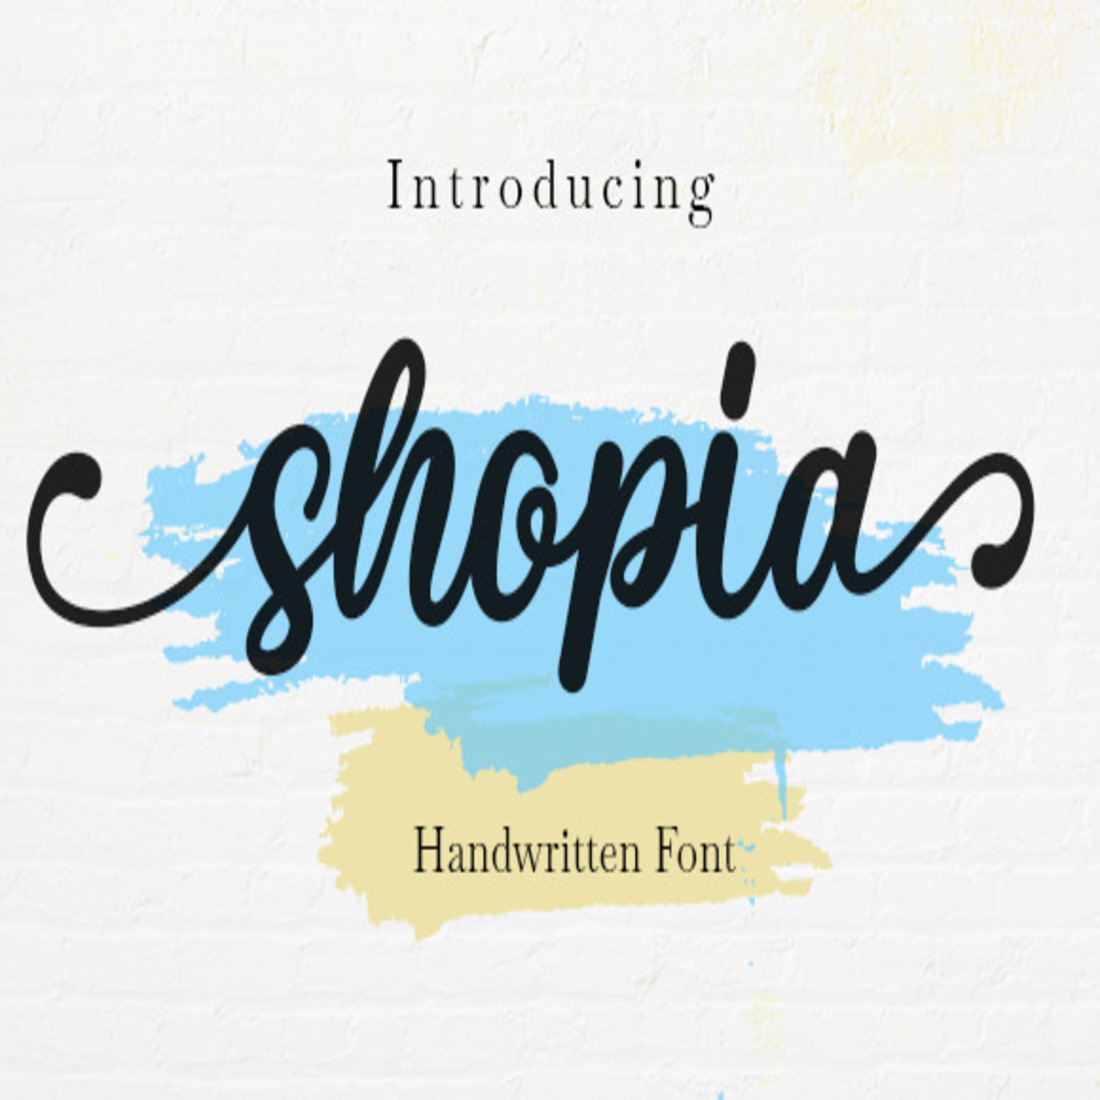 Shopia Duo preview image.